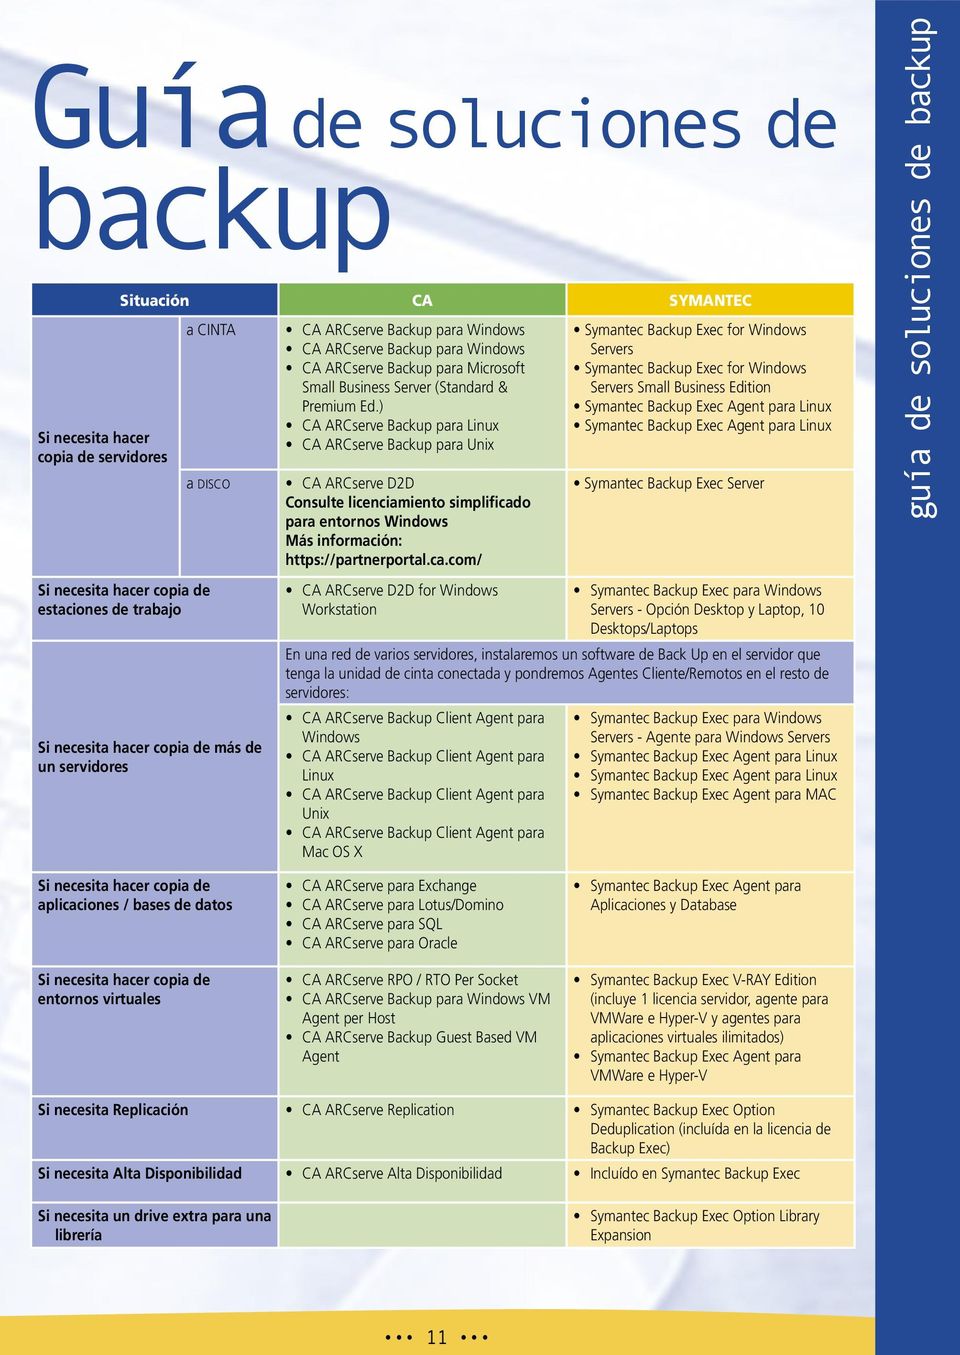 ) CA ARCserve Backup para Linux CA ARCserve Backup para Unix CA ARCserve D2D Consulte licenciamiento simplificad